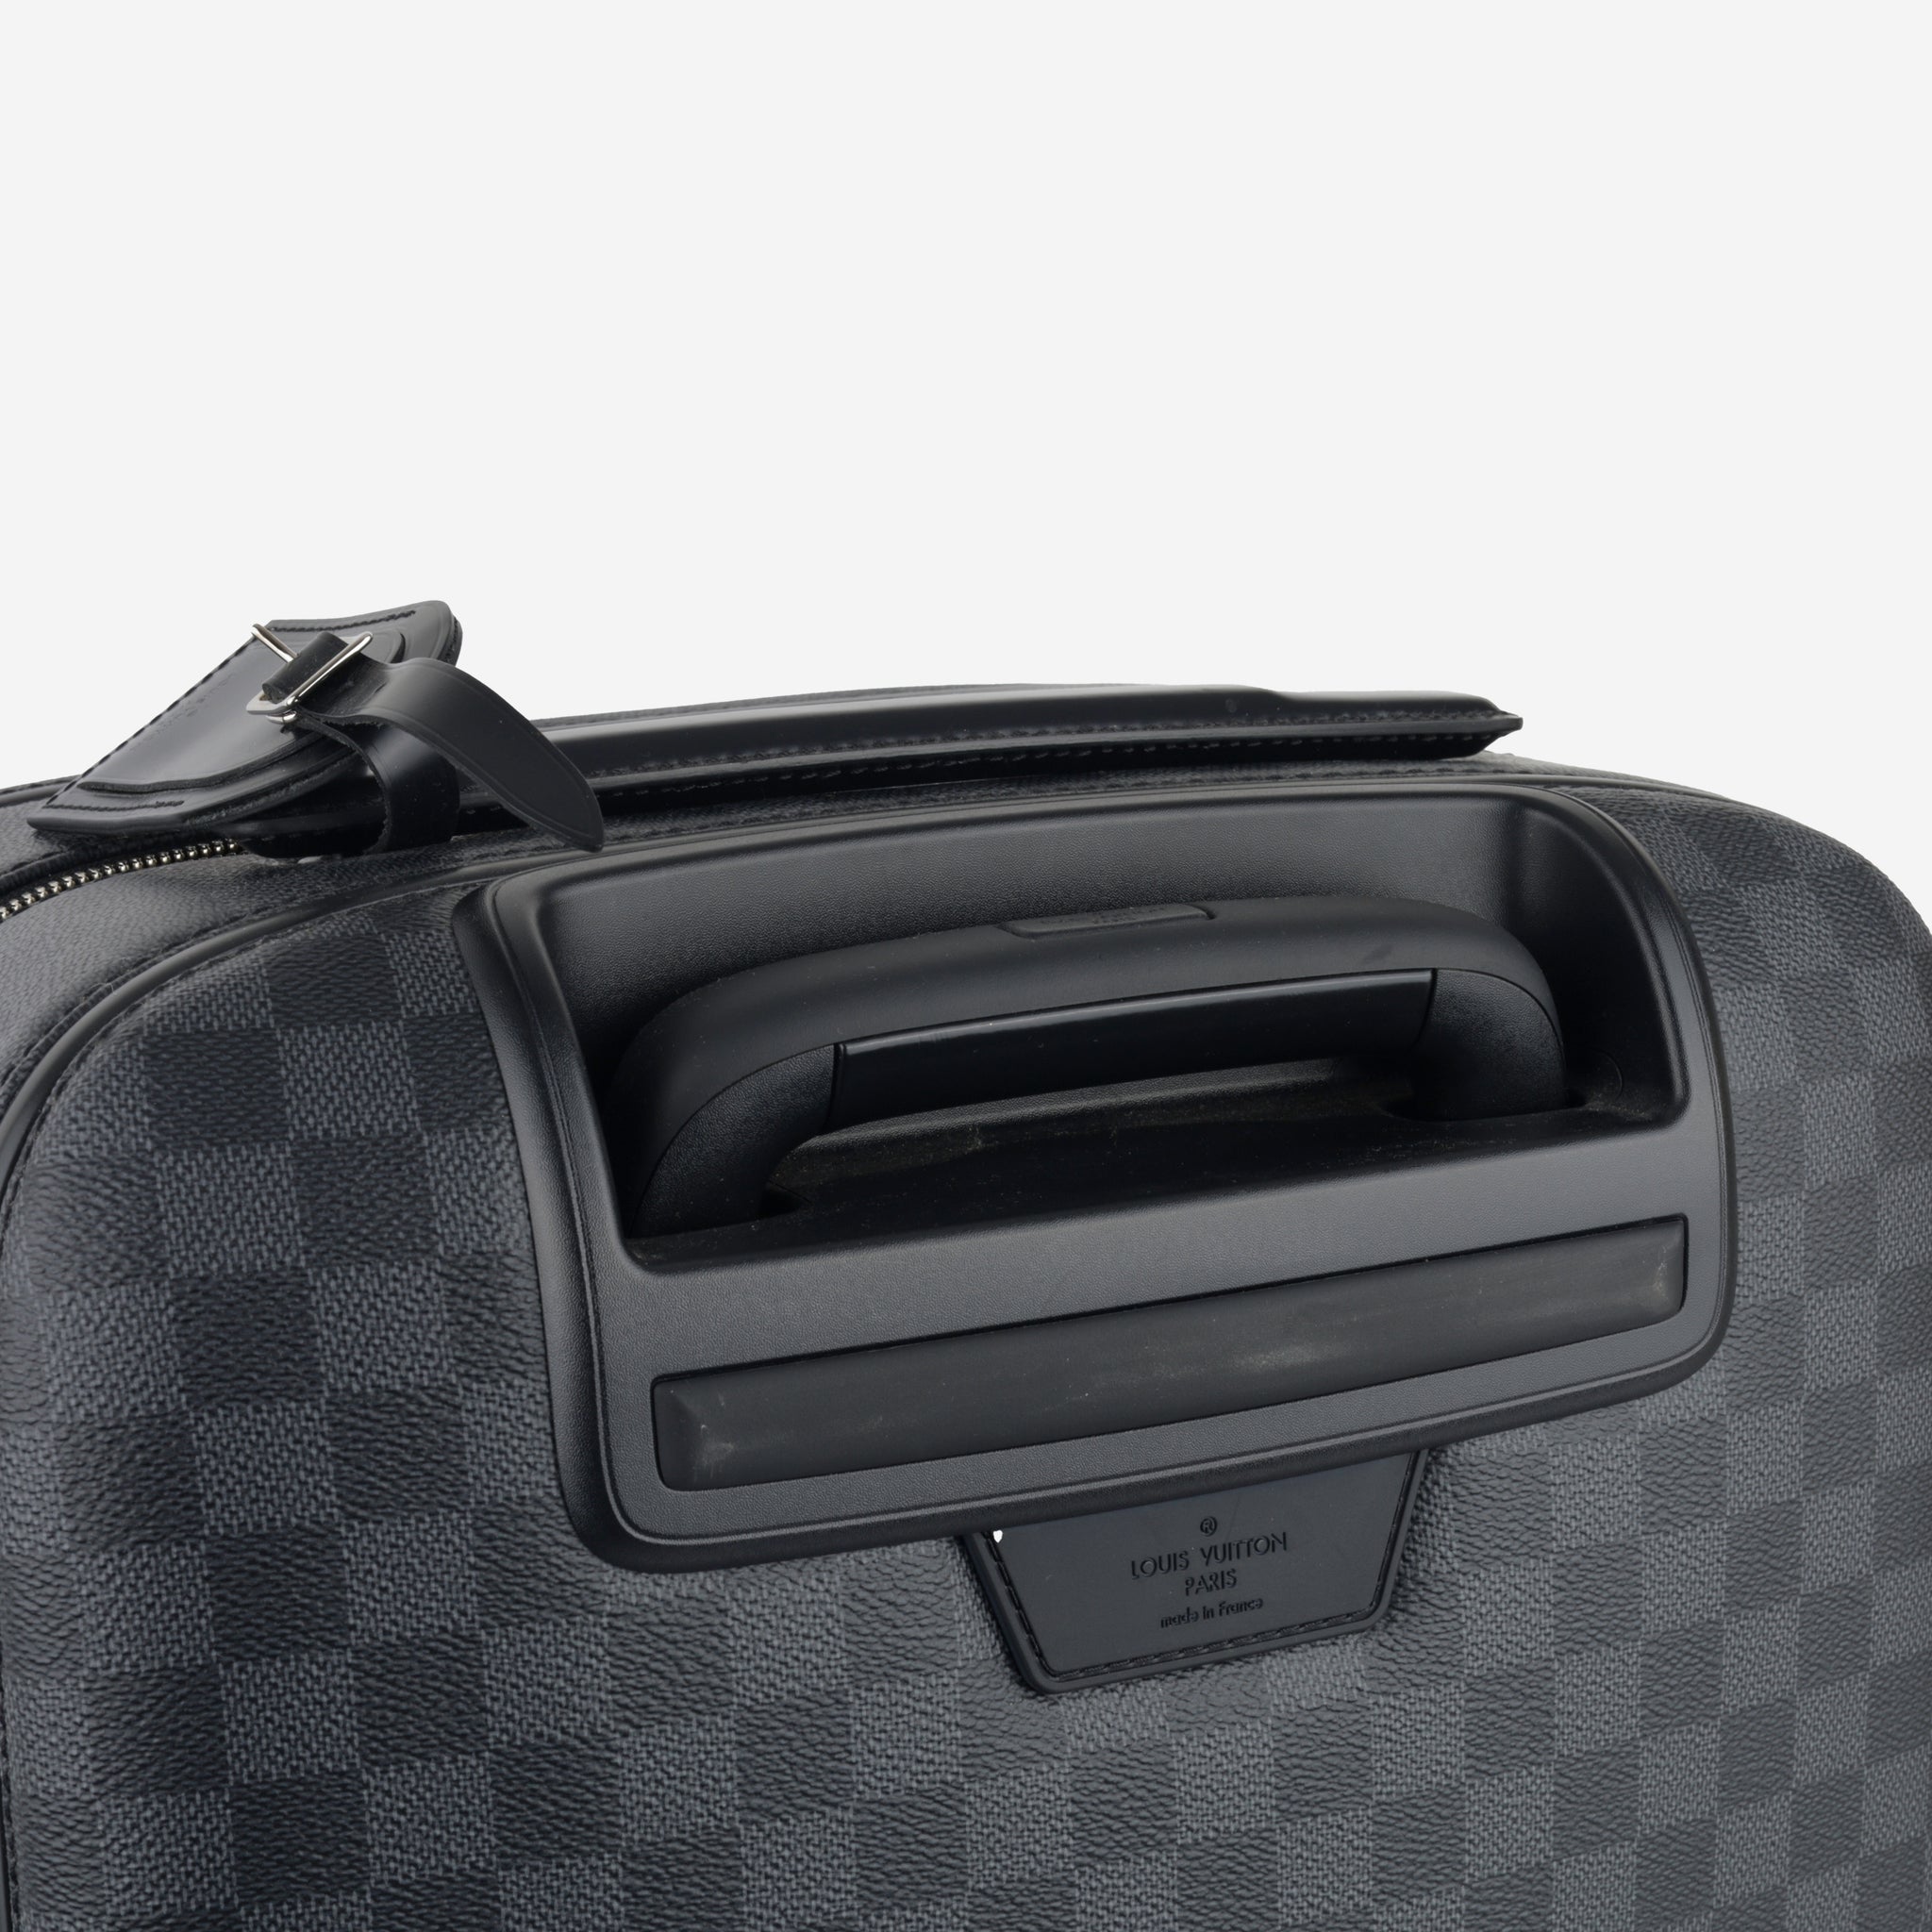 Louis Vuitton Monogram Zephyr Hard Case Luggage Bag 55 Brown